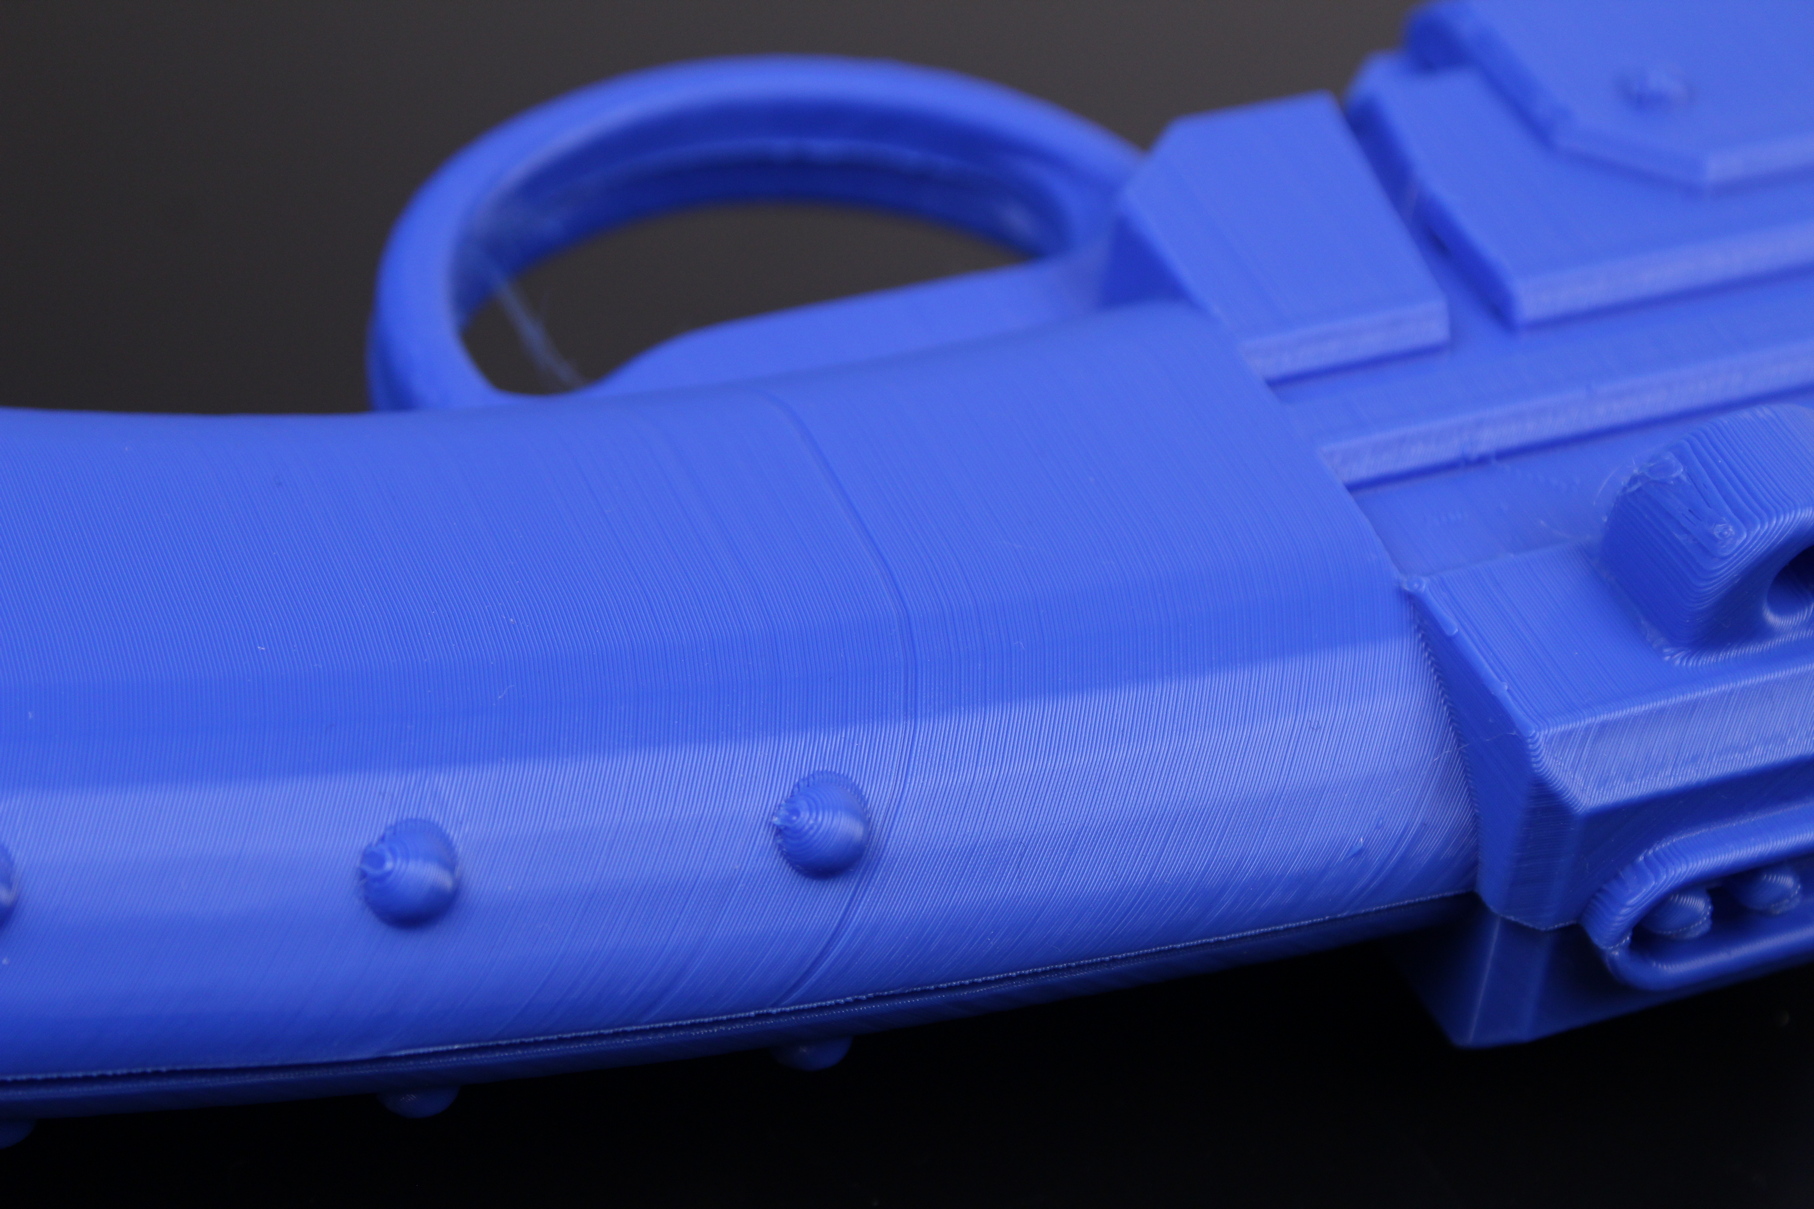 Mandalorian Rifle printed on the CR 30 3DPrintMill 2 | Creality 3DPrintMill (CR-30) Review: Belt Printer for Batch 3D Printing